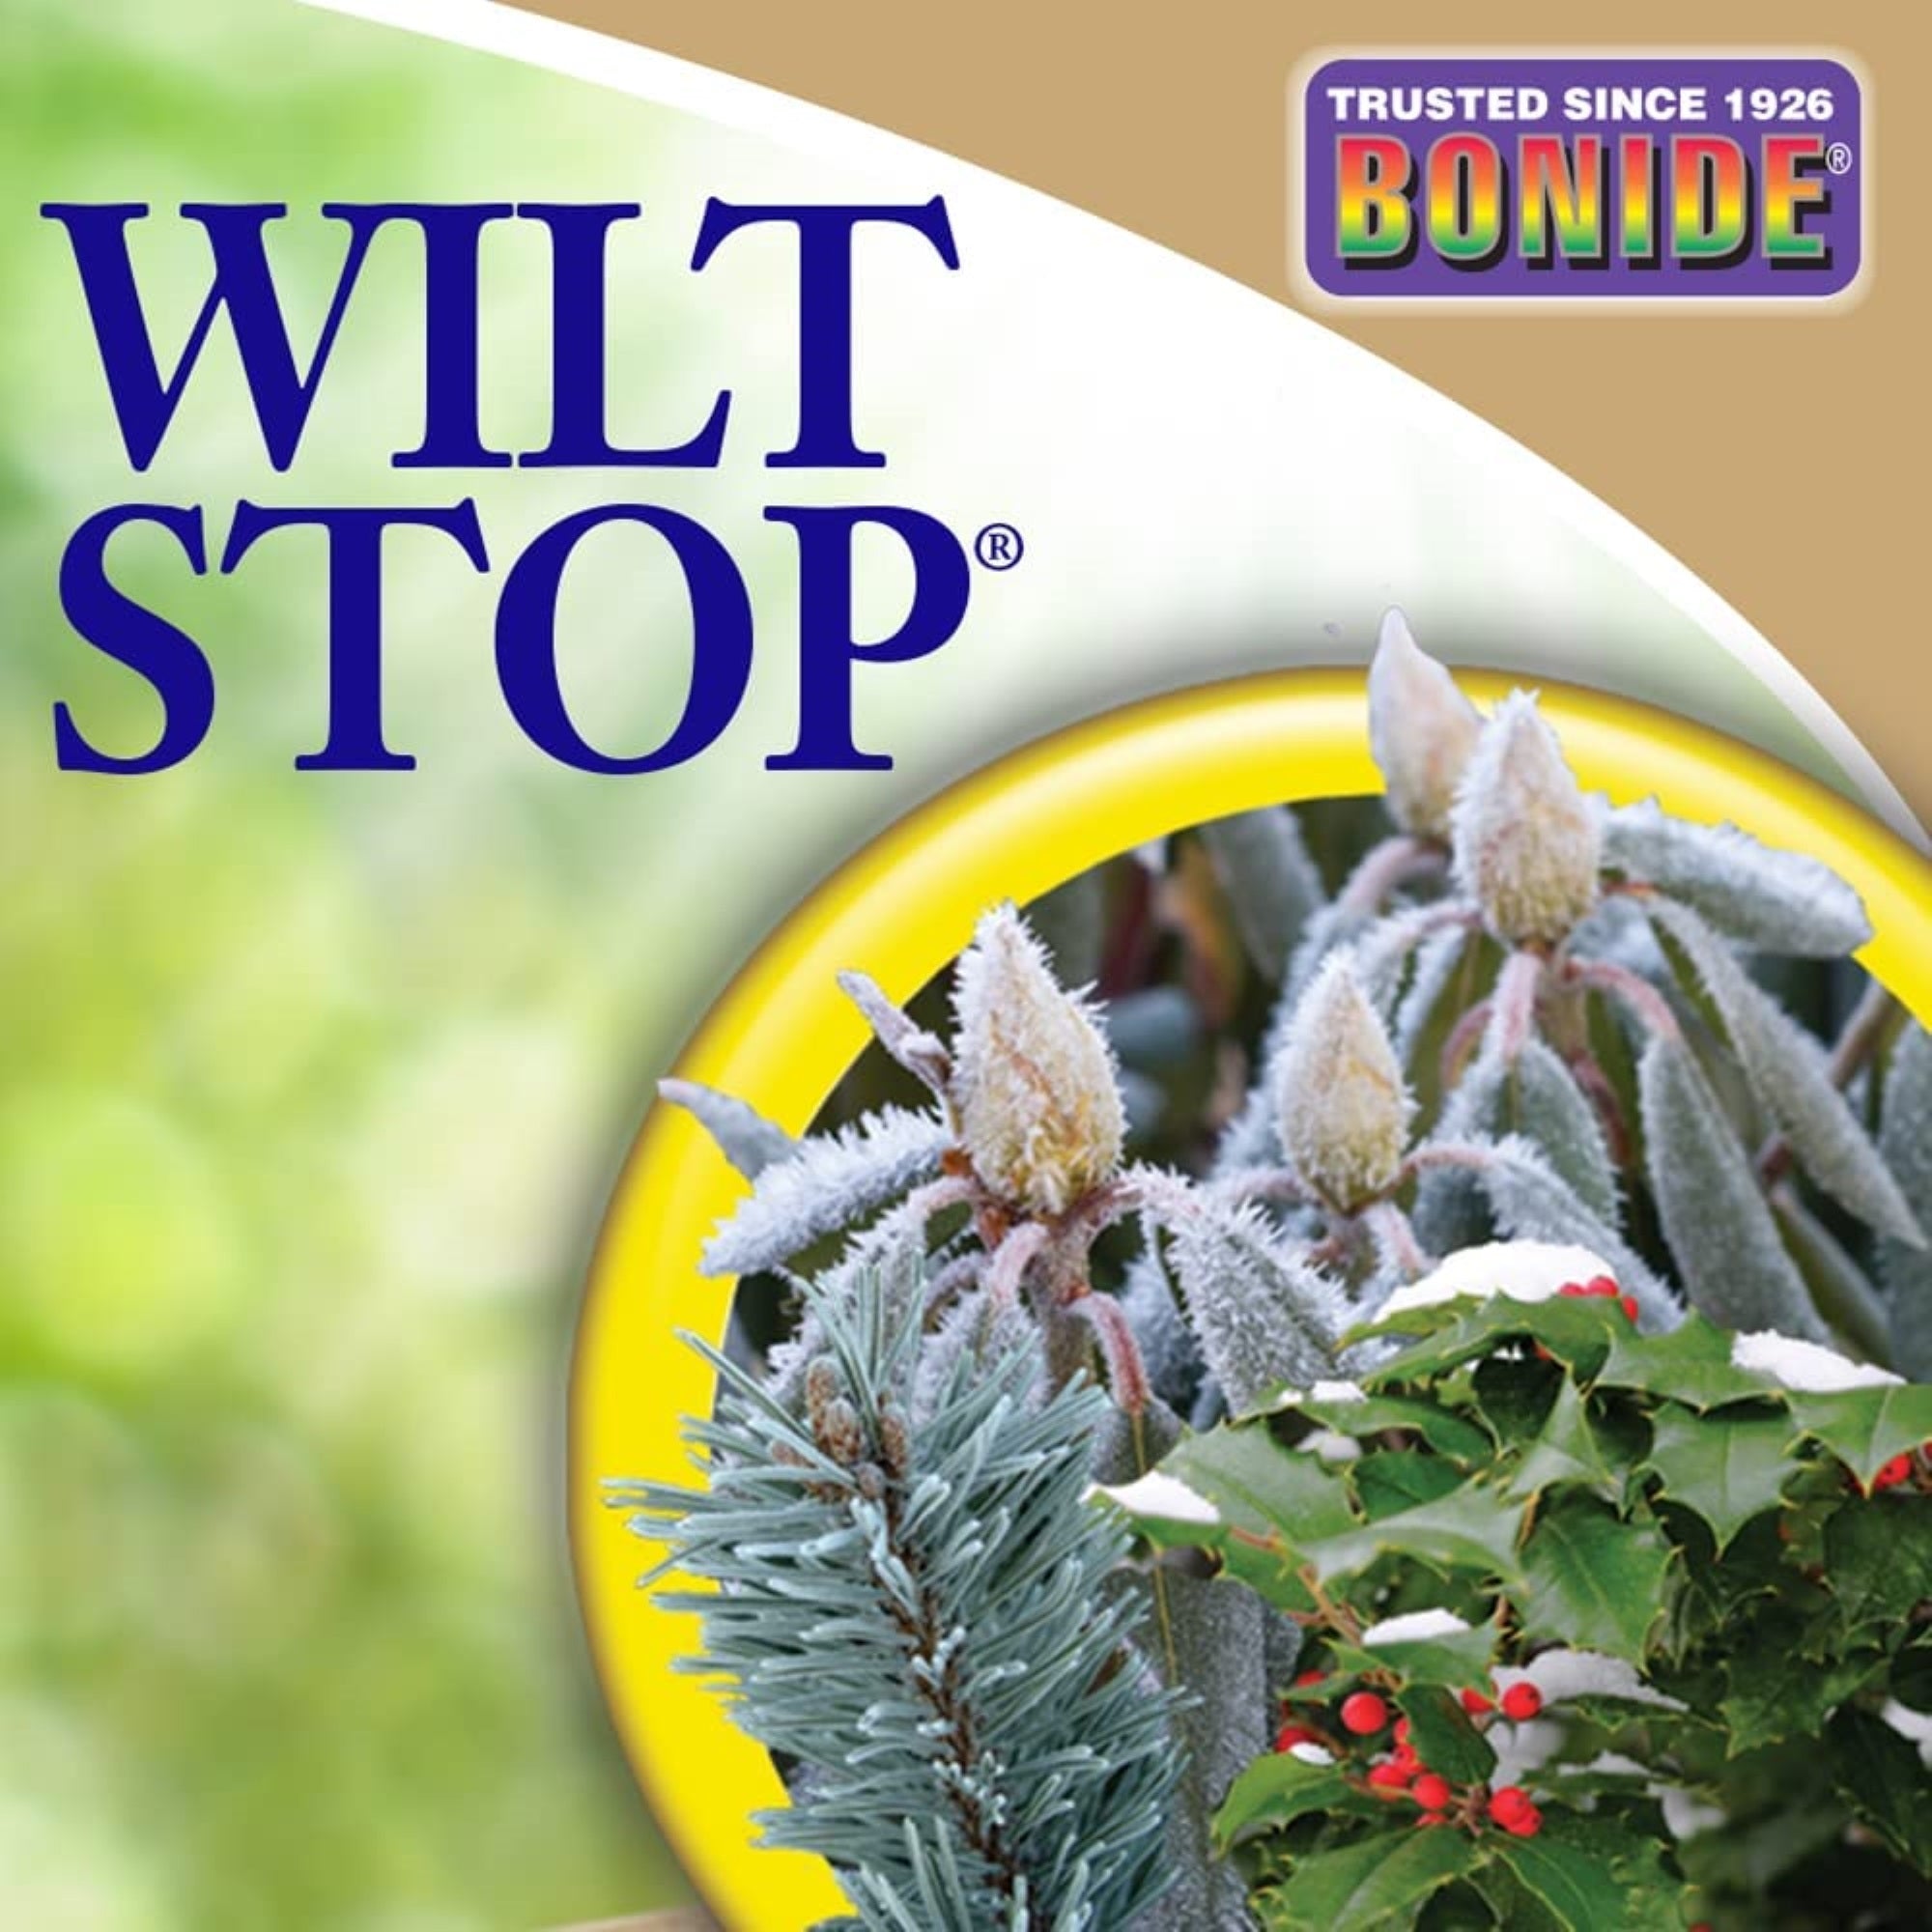 Bonide Ready to Use Wilt Stop Plant Protector Spray, 40 oz